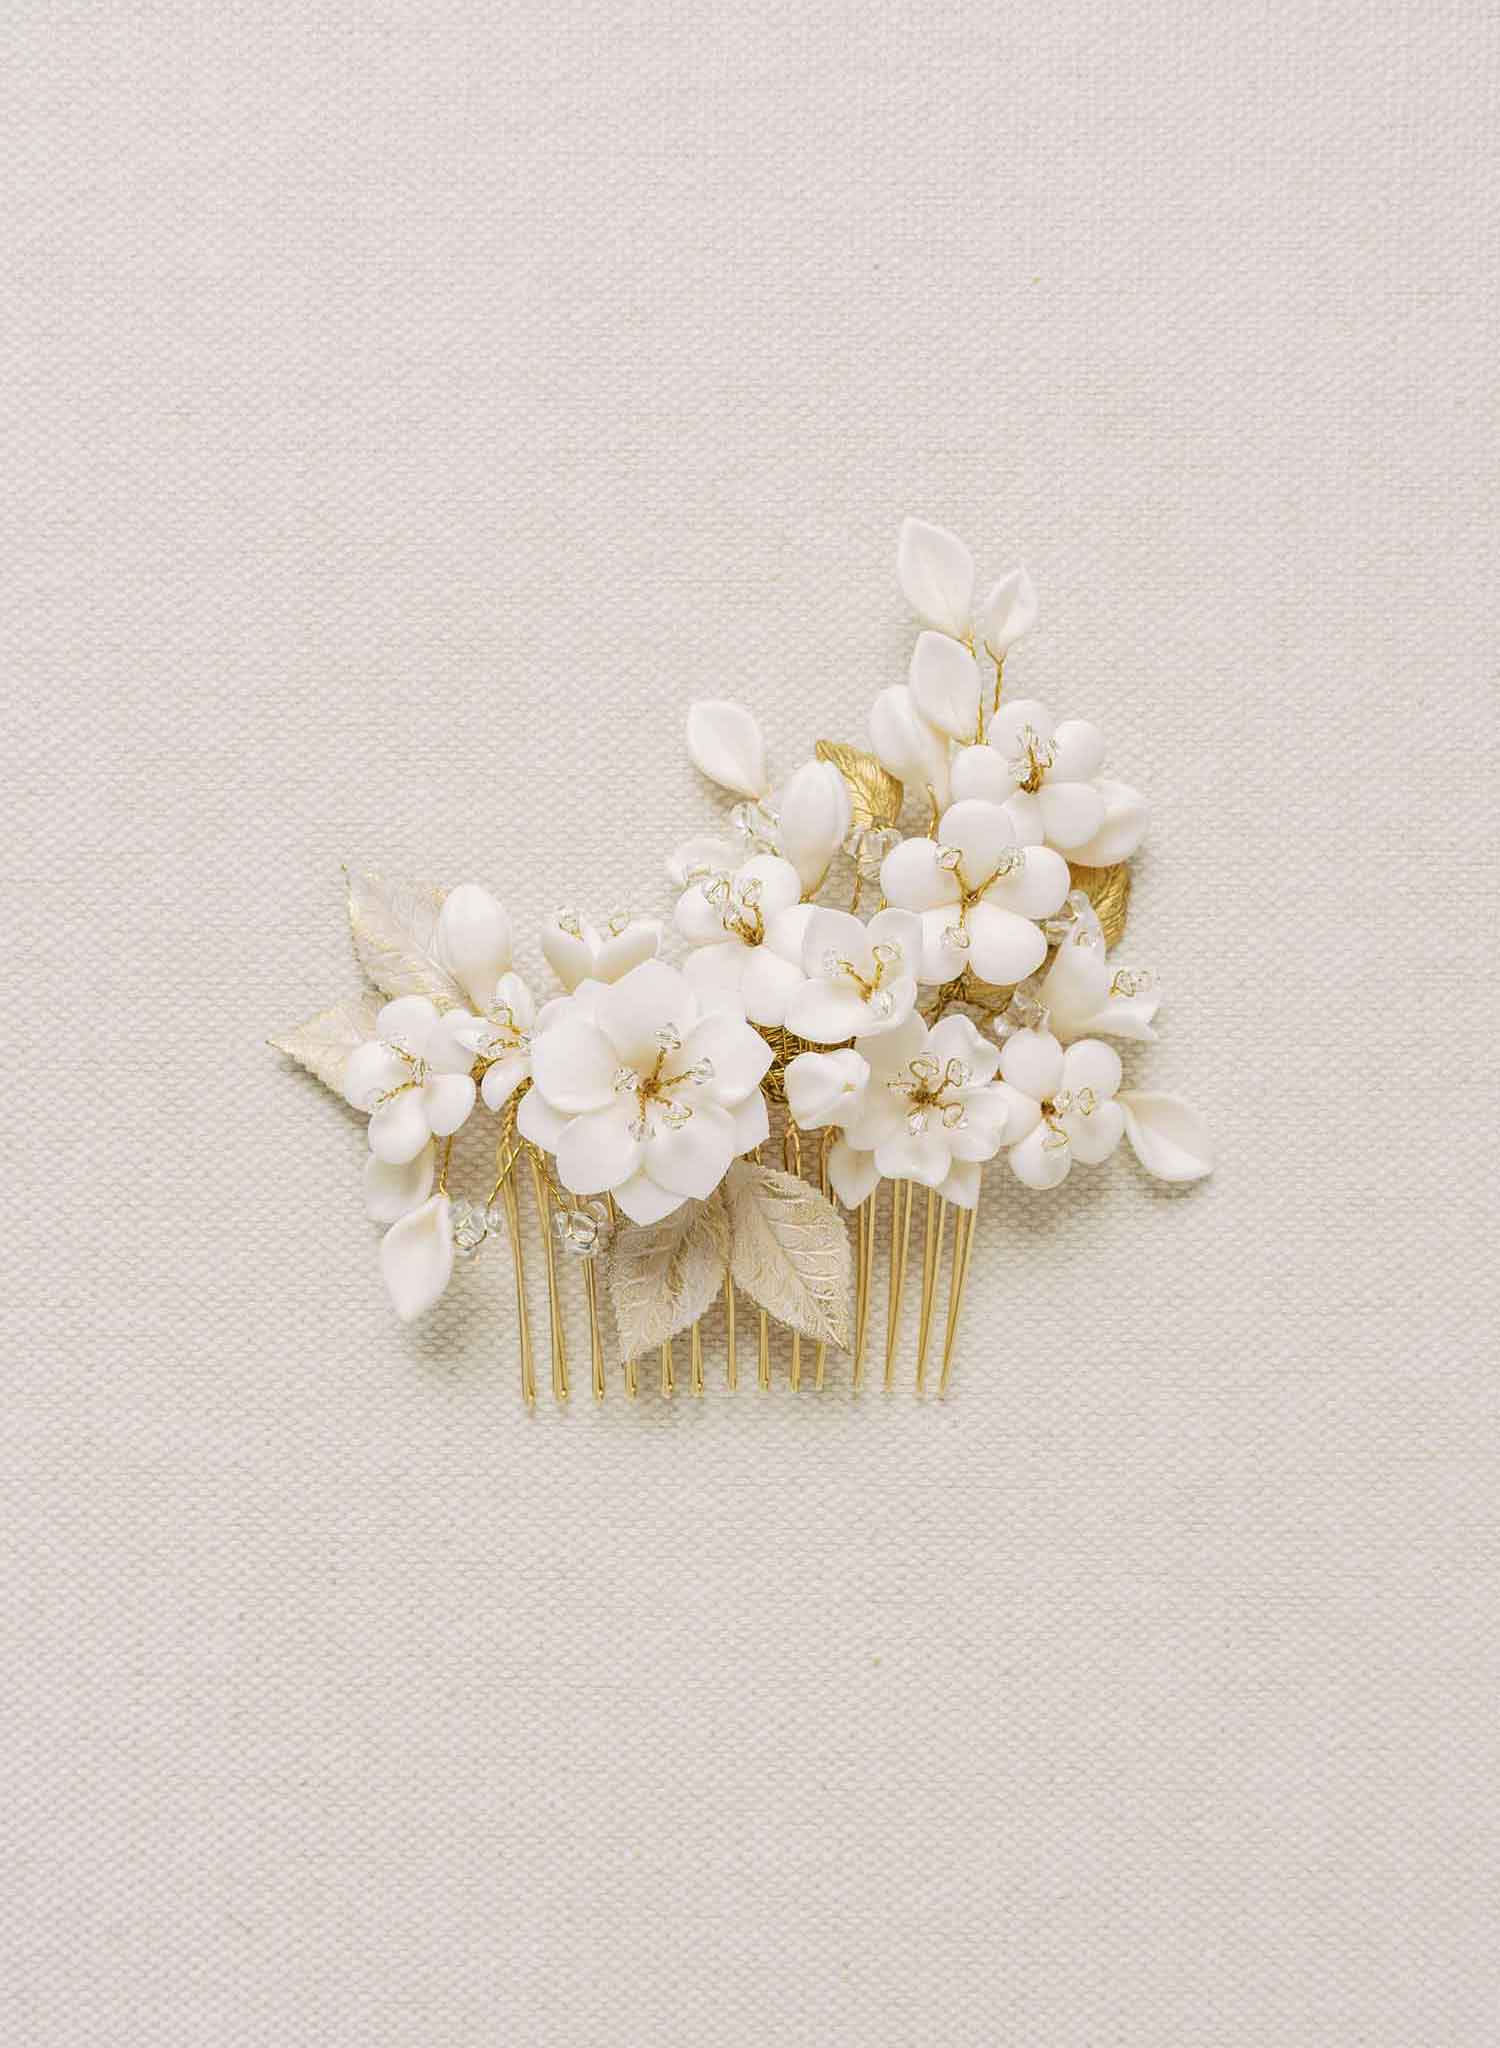 Creamy blossom bridal hair comb - Style #2163